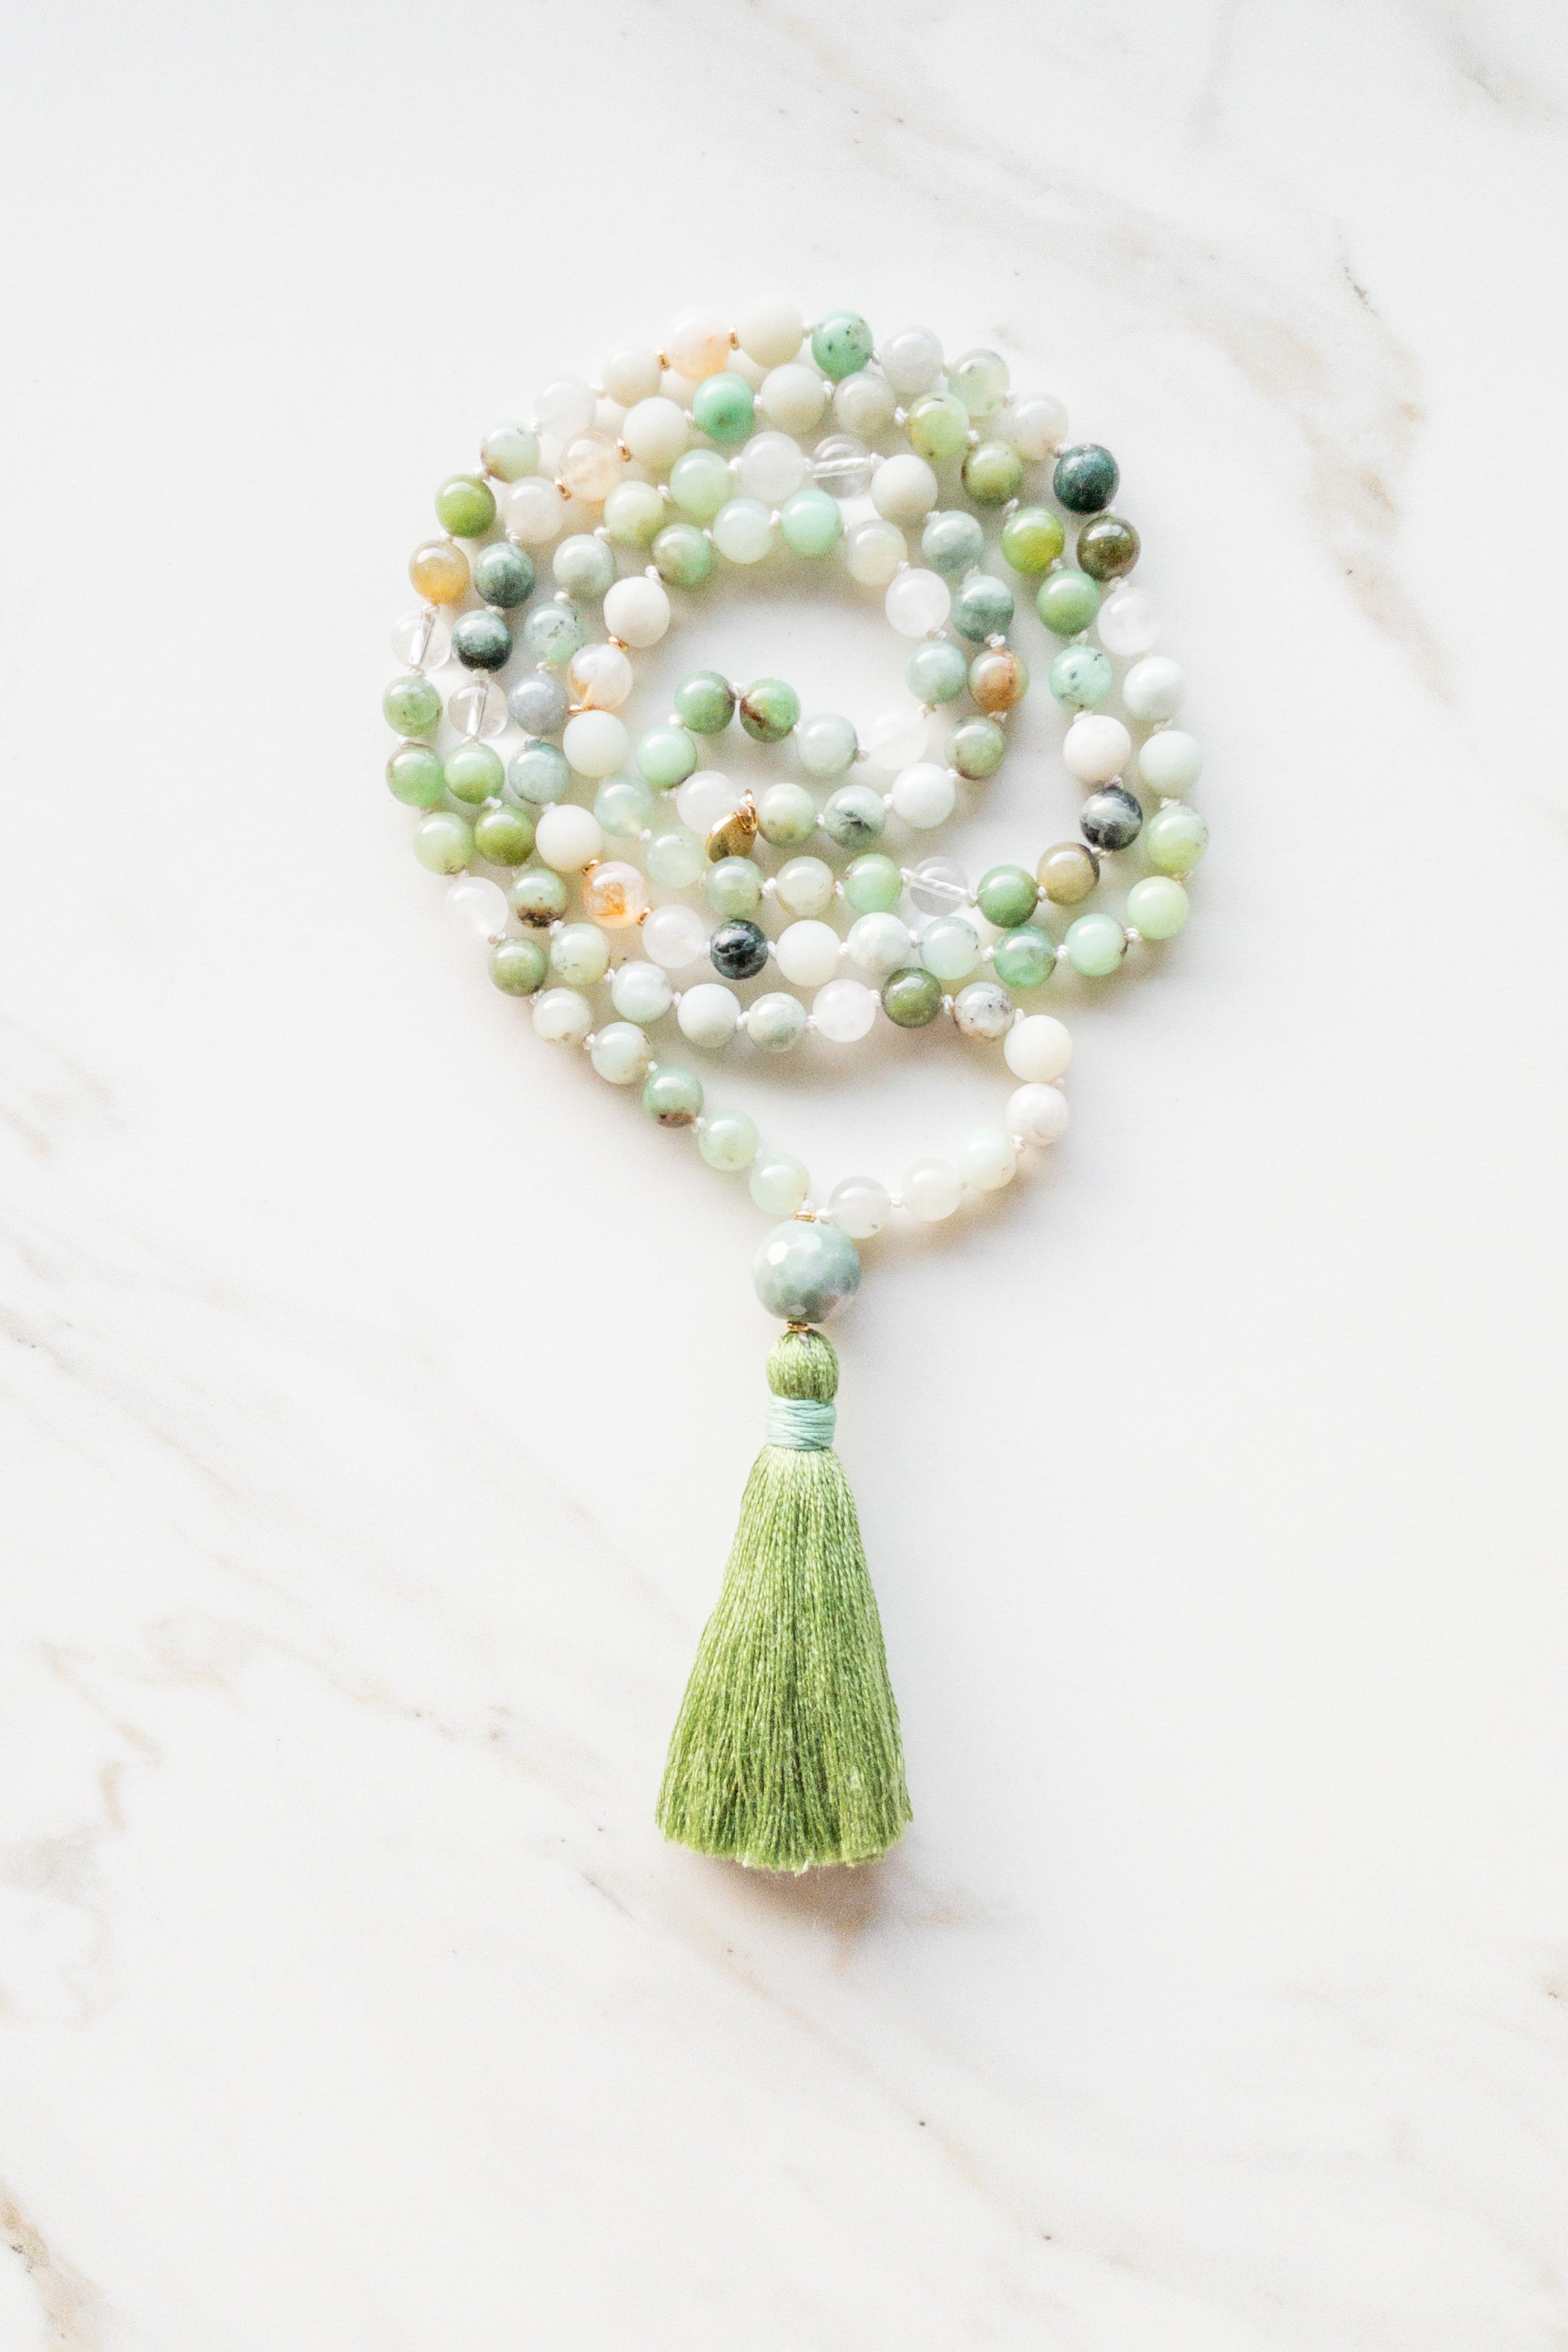 Spiritual Oasis Mala 108 beads - Chrysoprase, Jade, Citrine - Oceaneye collection